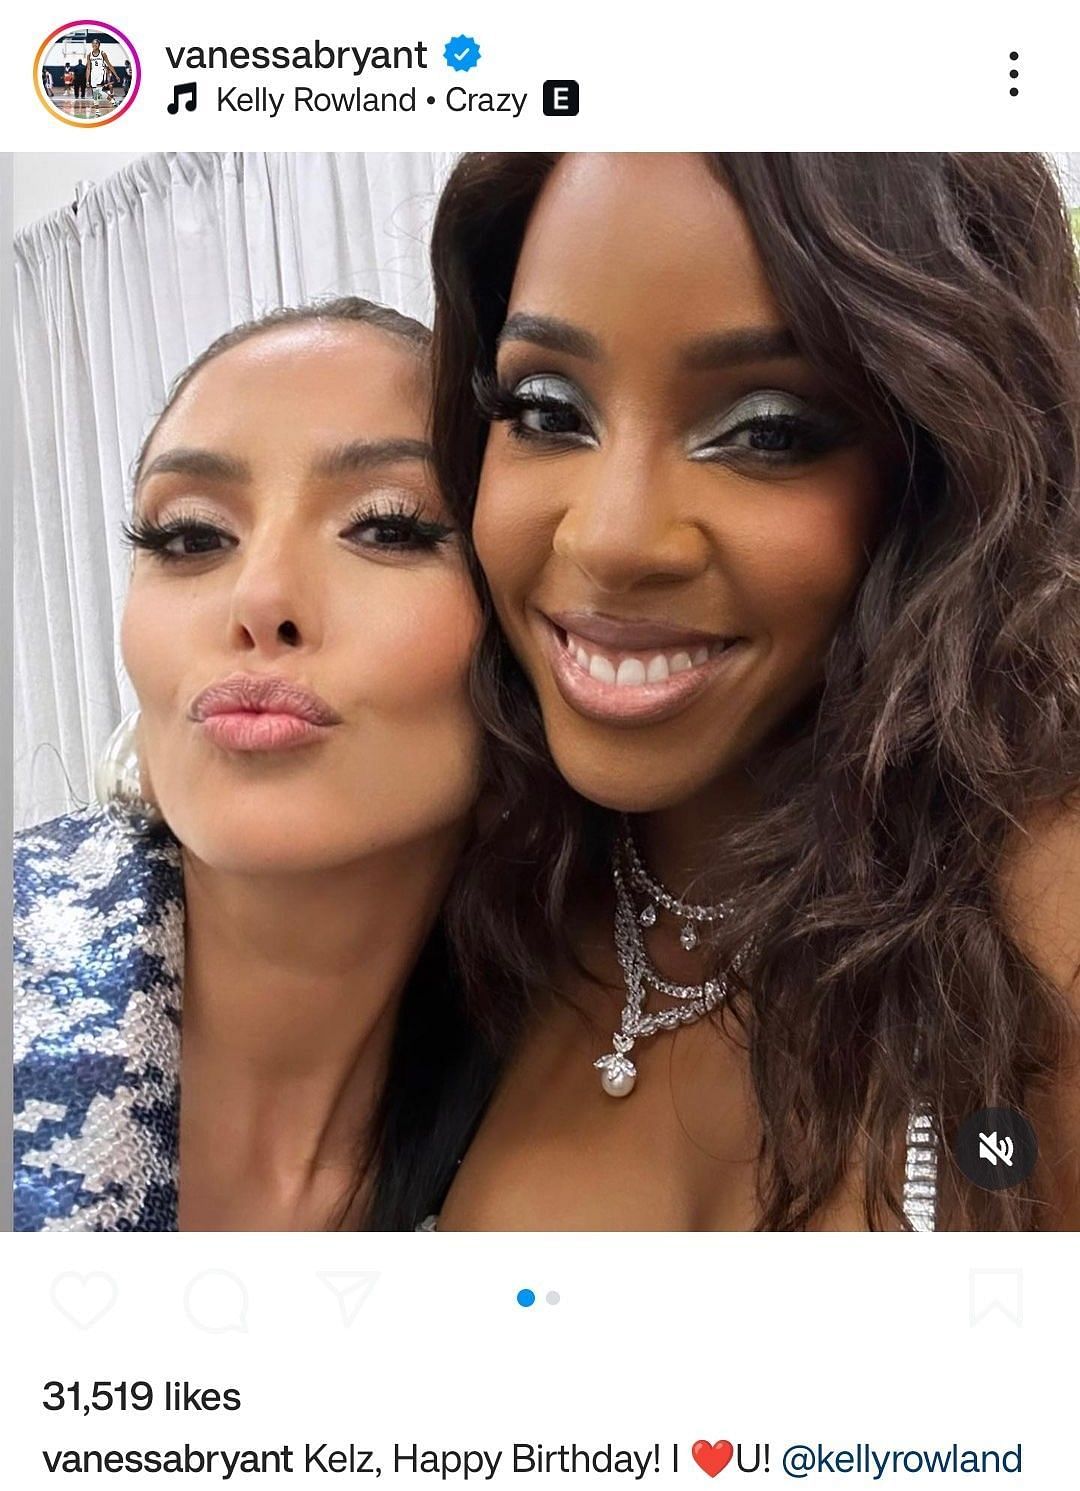 Vanessa Bryant showering love for her bestie Kelly Rowland via Instagram post